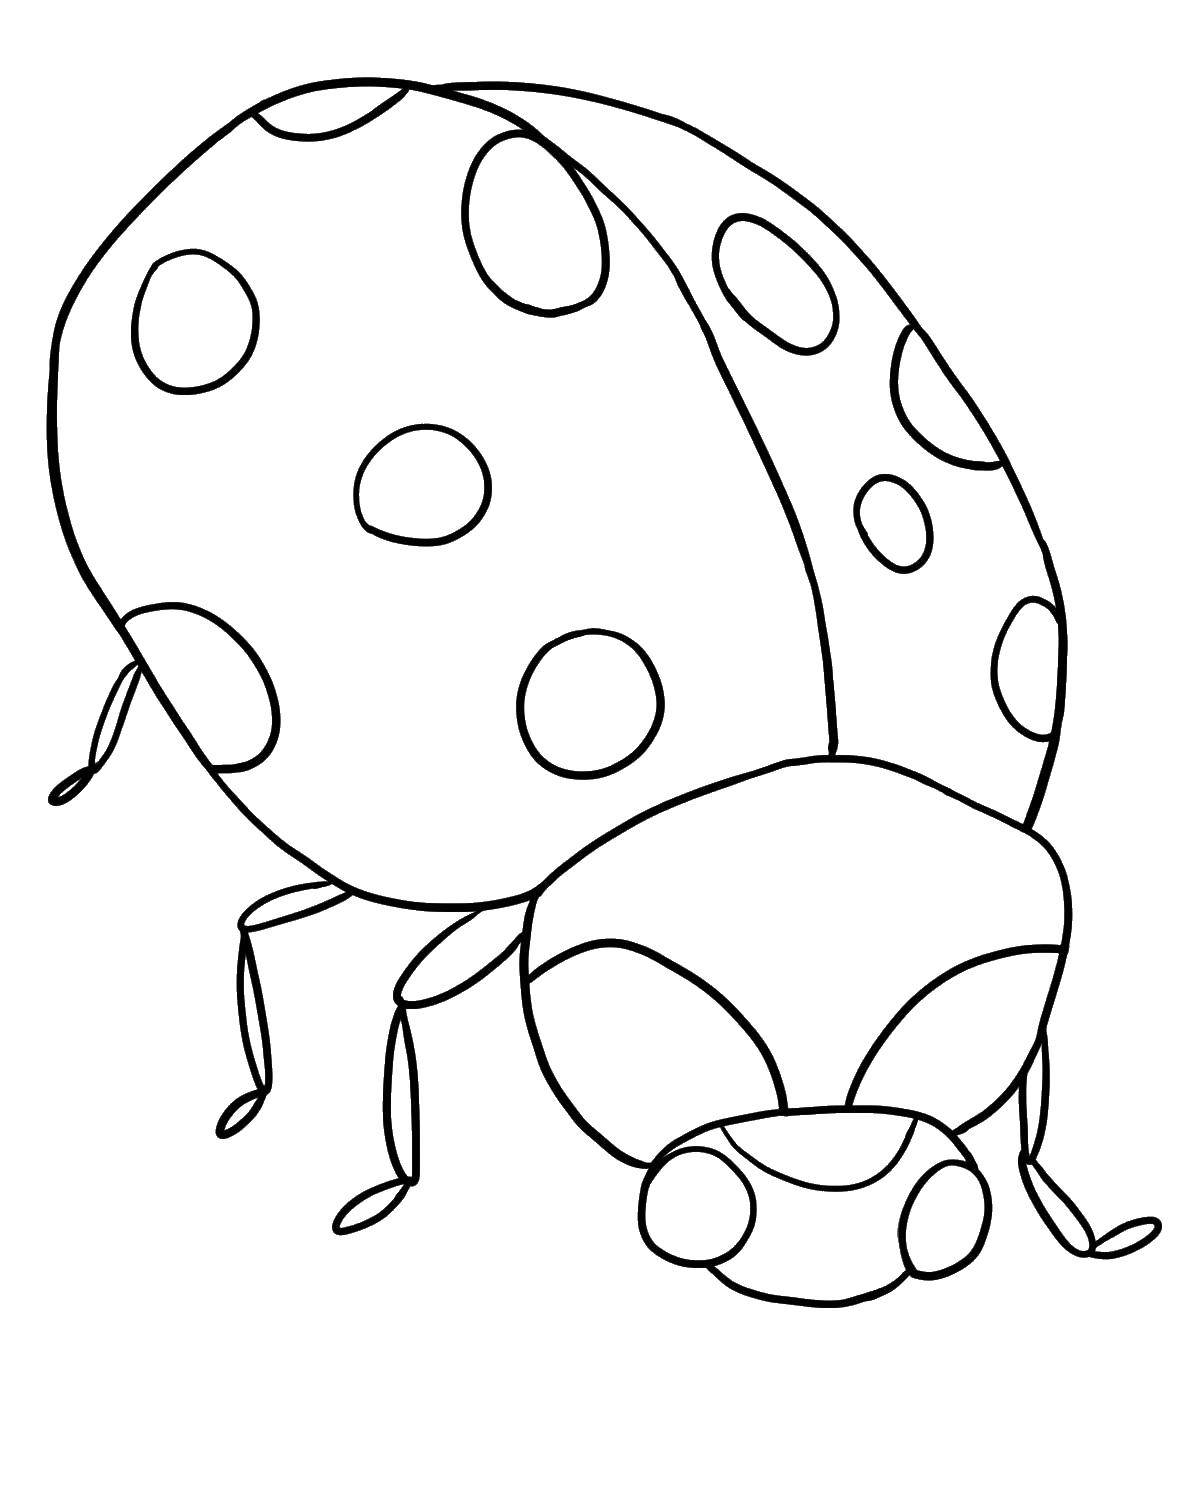 Coloring Ladybug. Category Insects. Tags:  Ladybug, beetle.